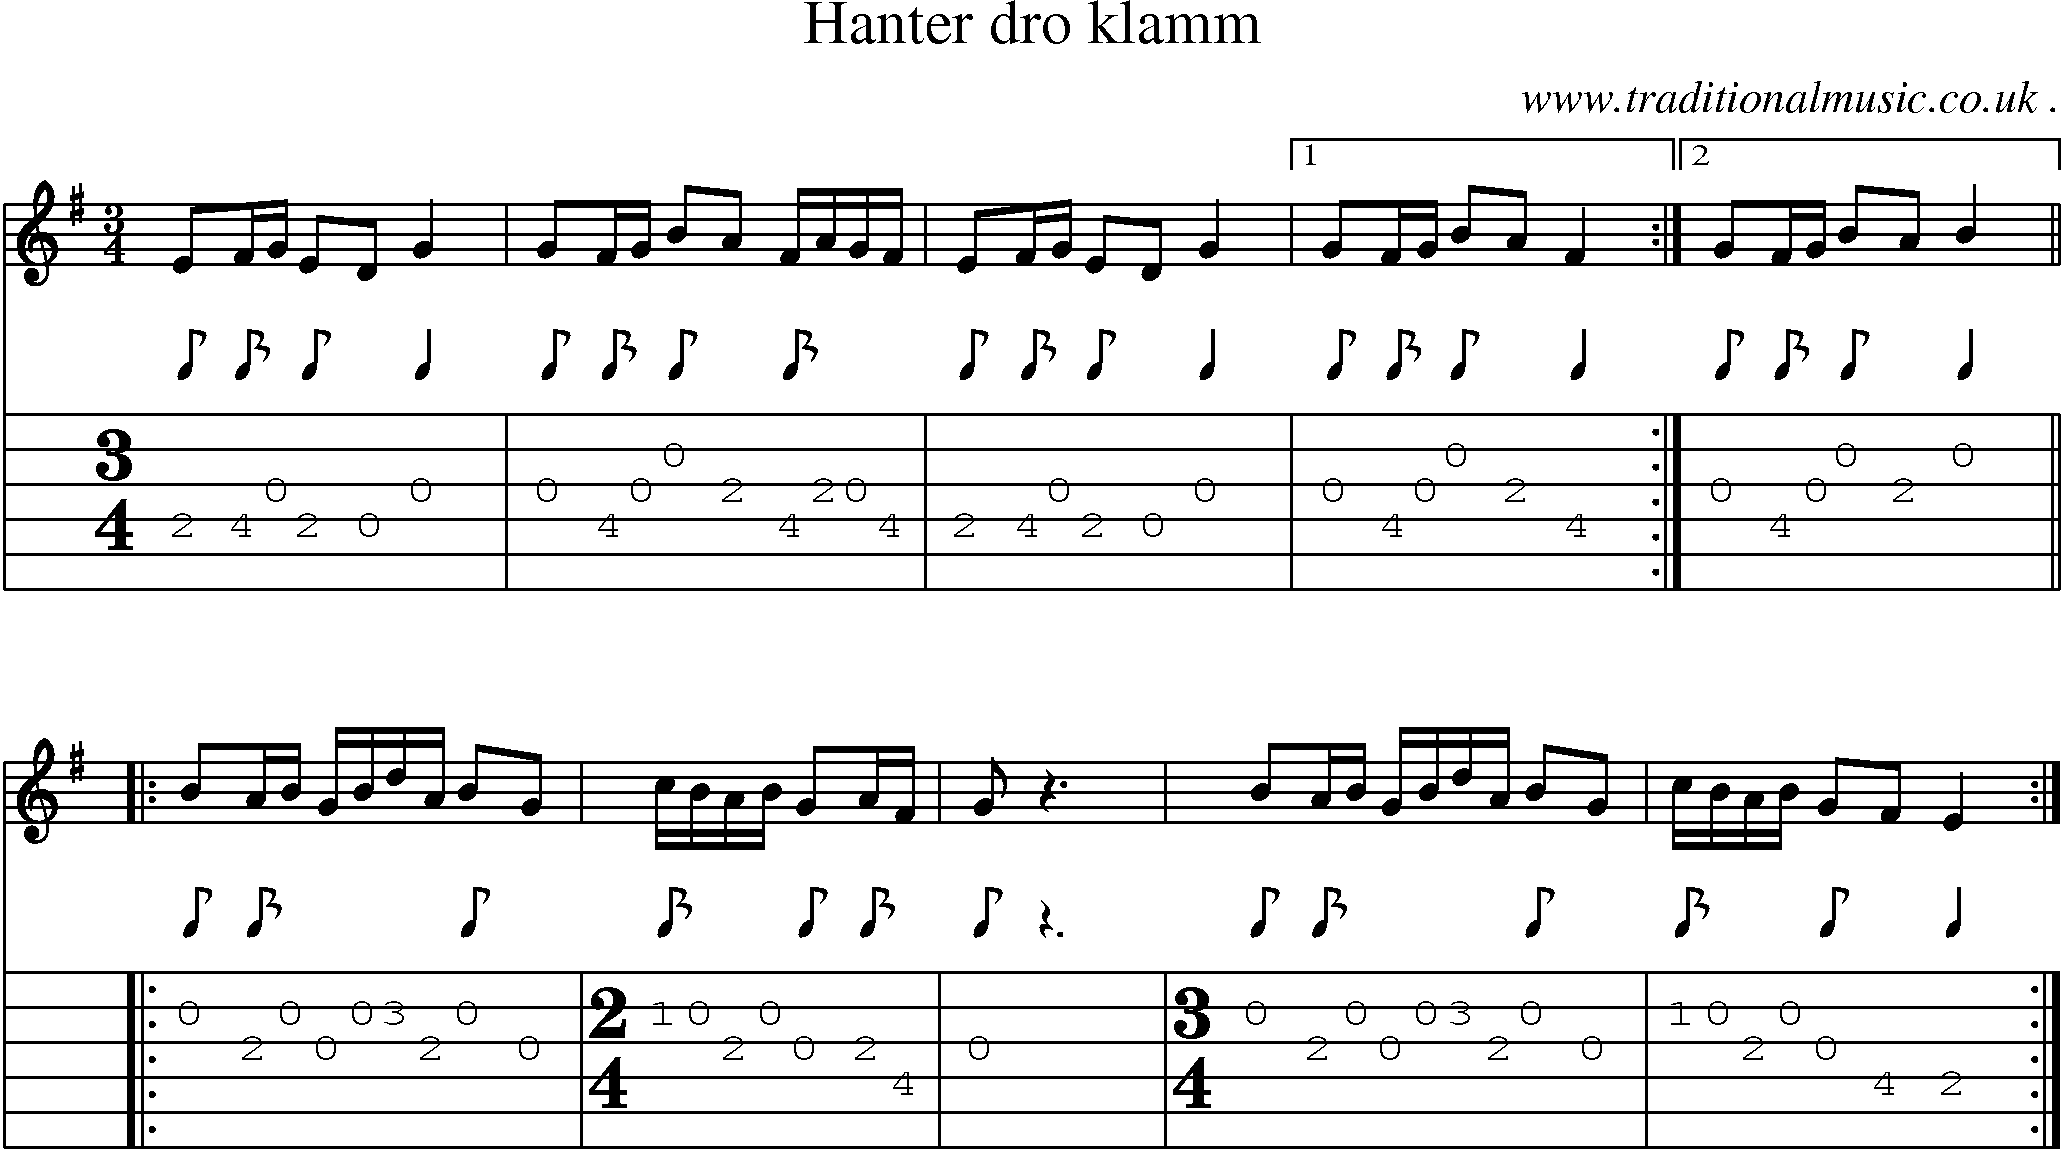 Sheet-Music and Guitar Tabs for Hanter Dro Klamm